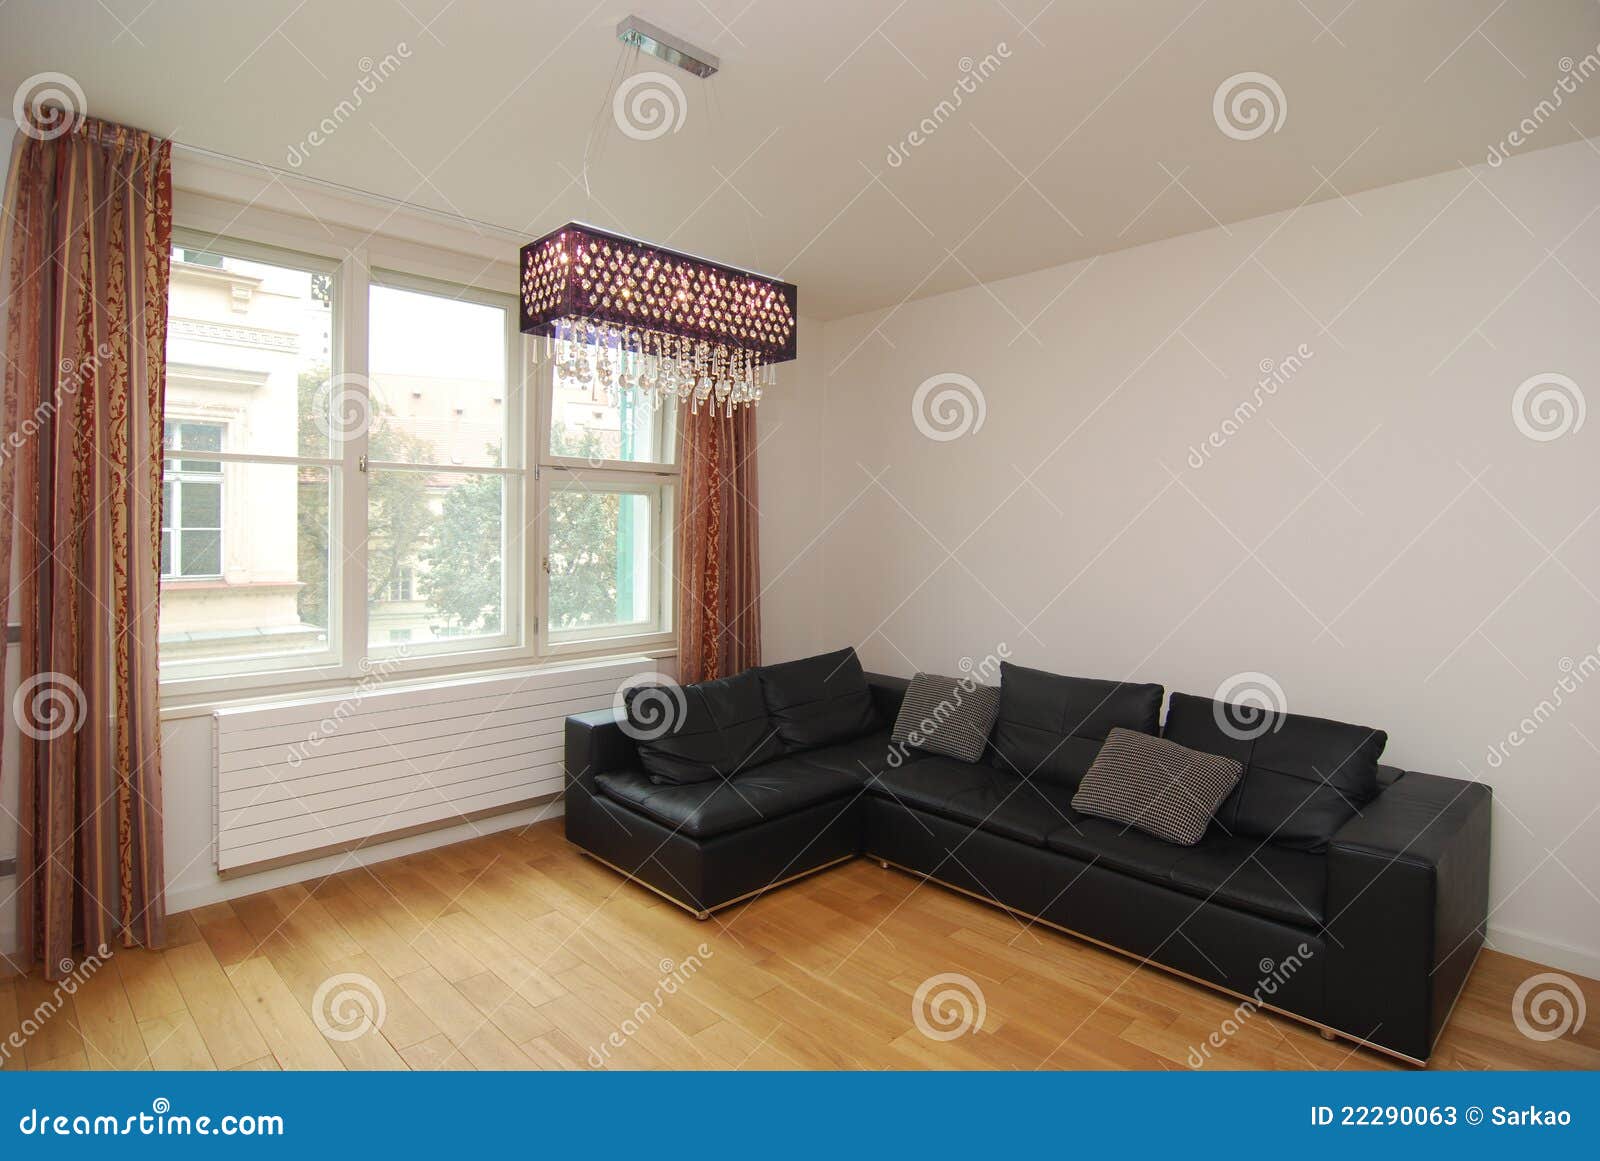 Simple Modern Living Room